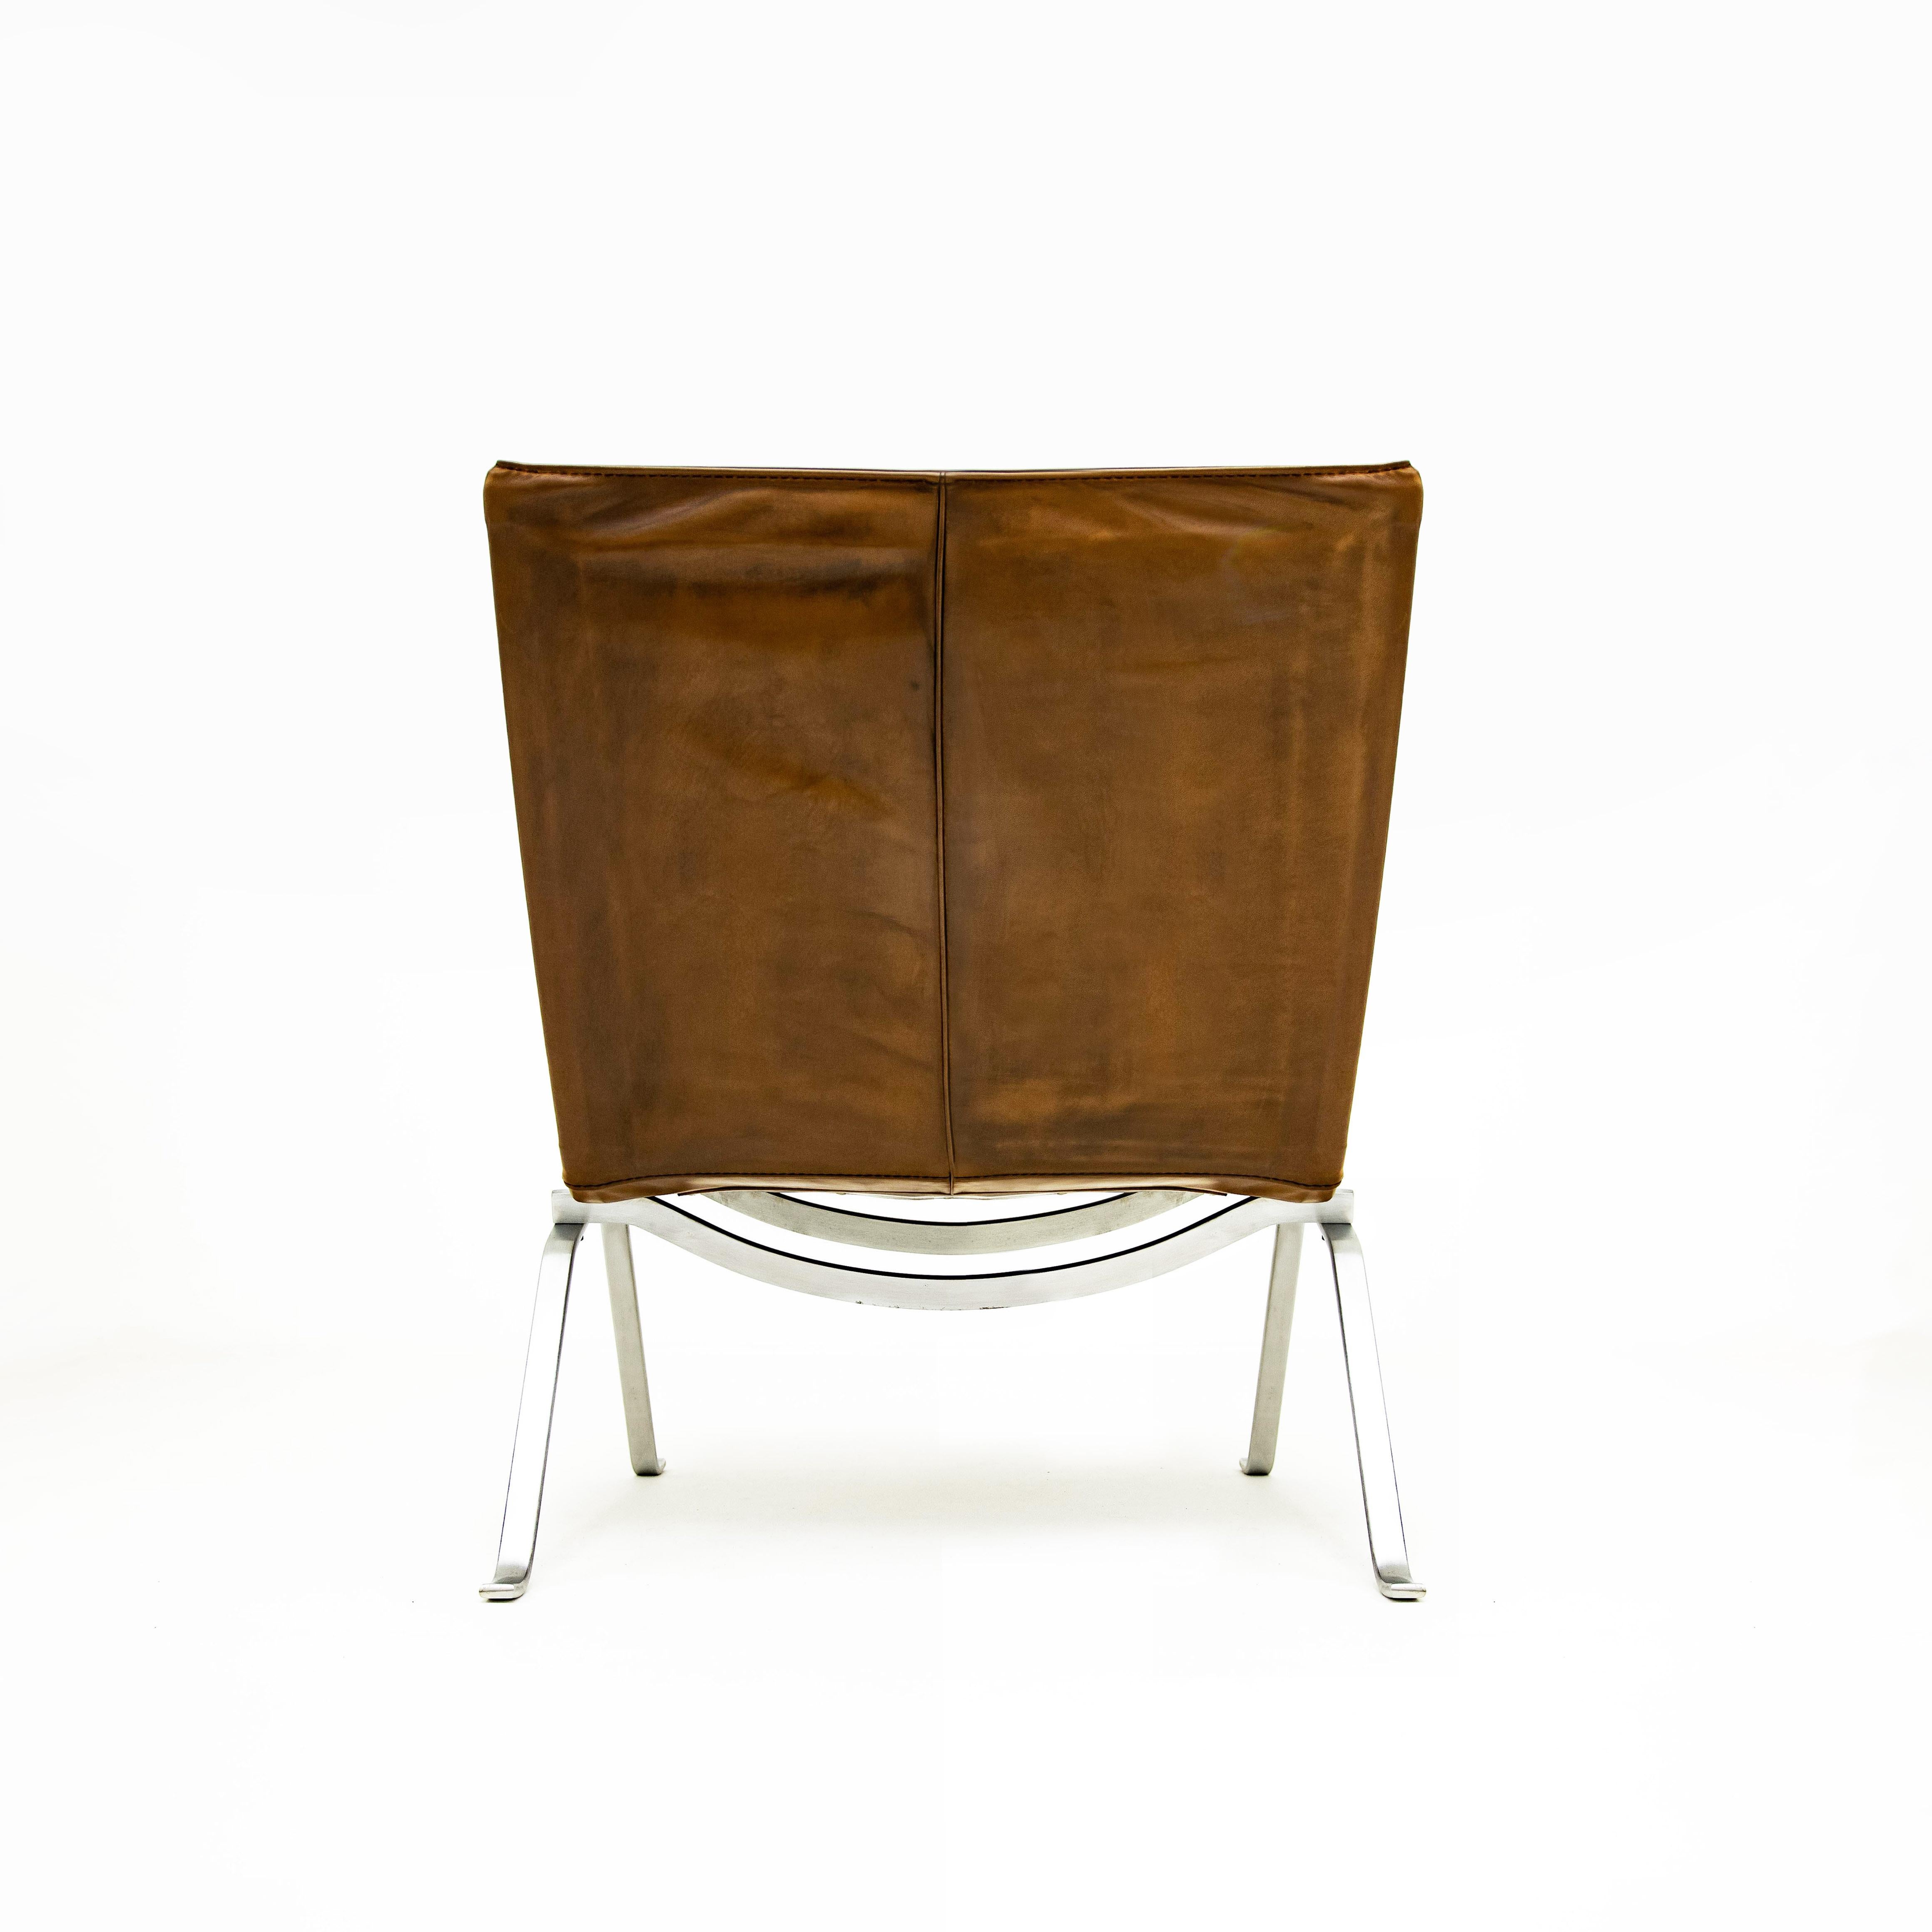 Steel Poul Kjaerholm PK22 Lounge chair in Cognac leather for E. Kold Christensen